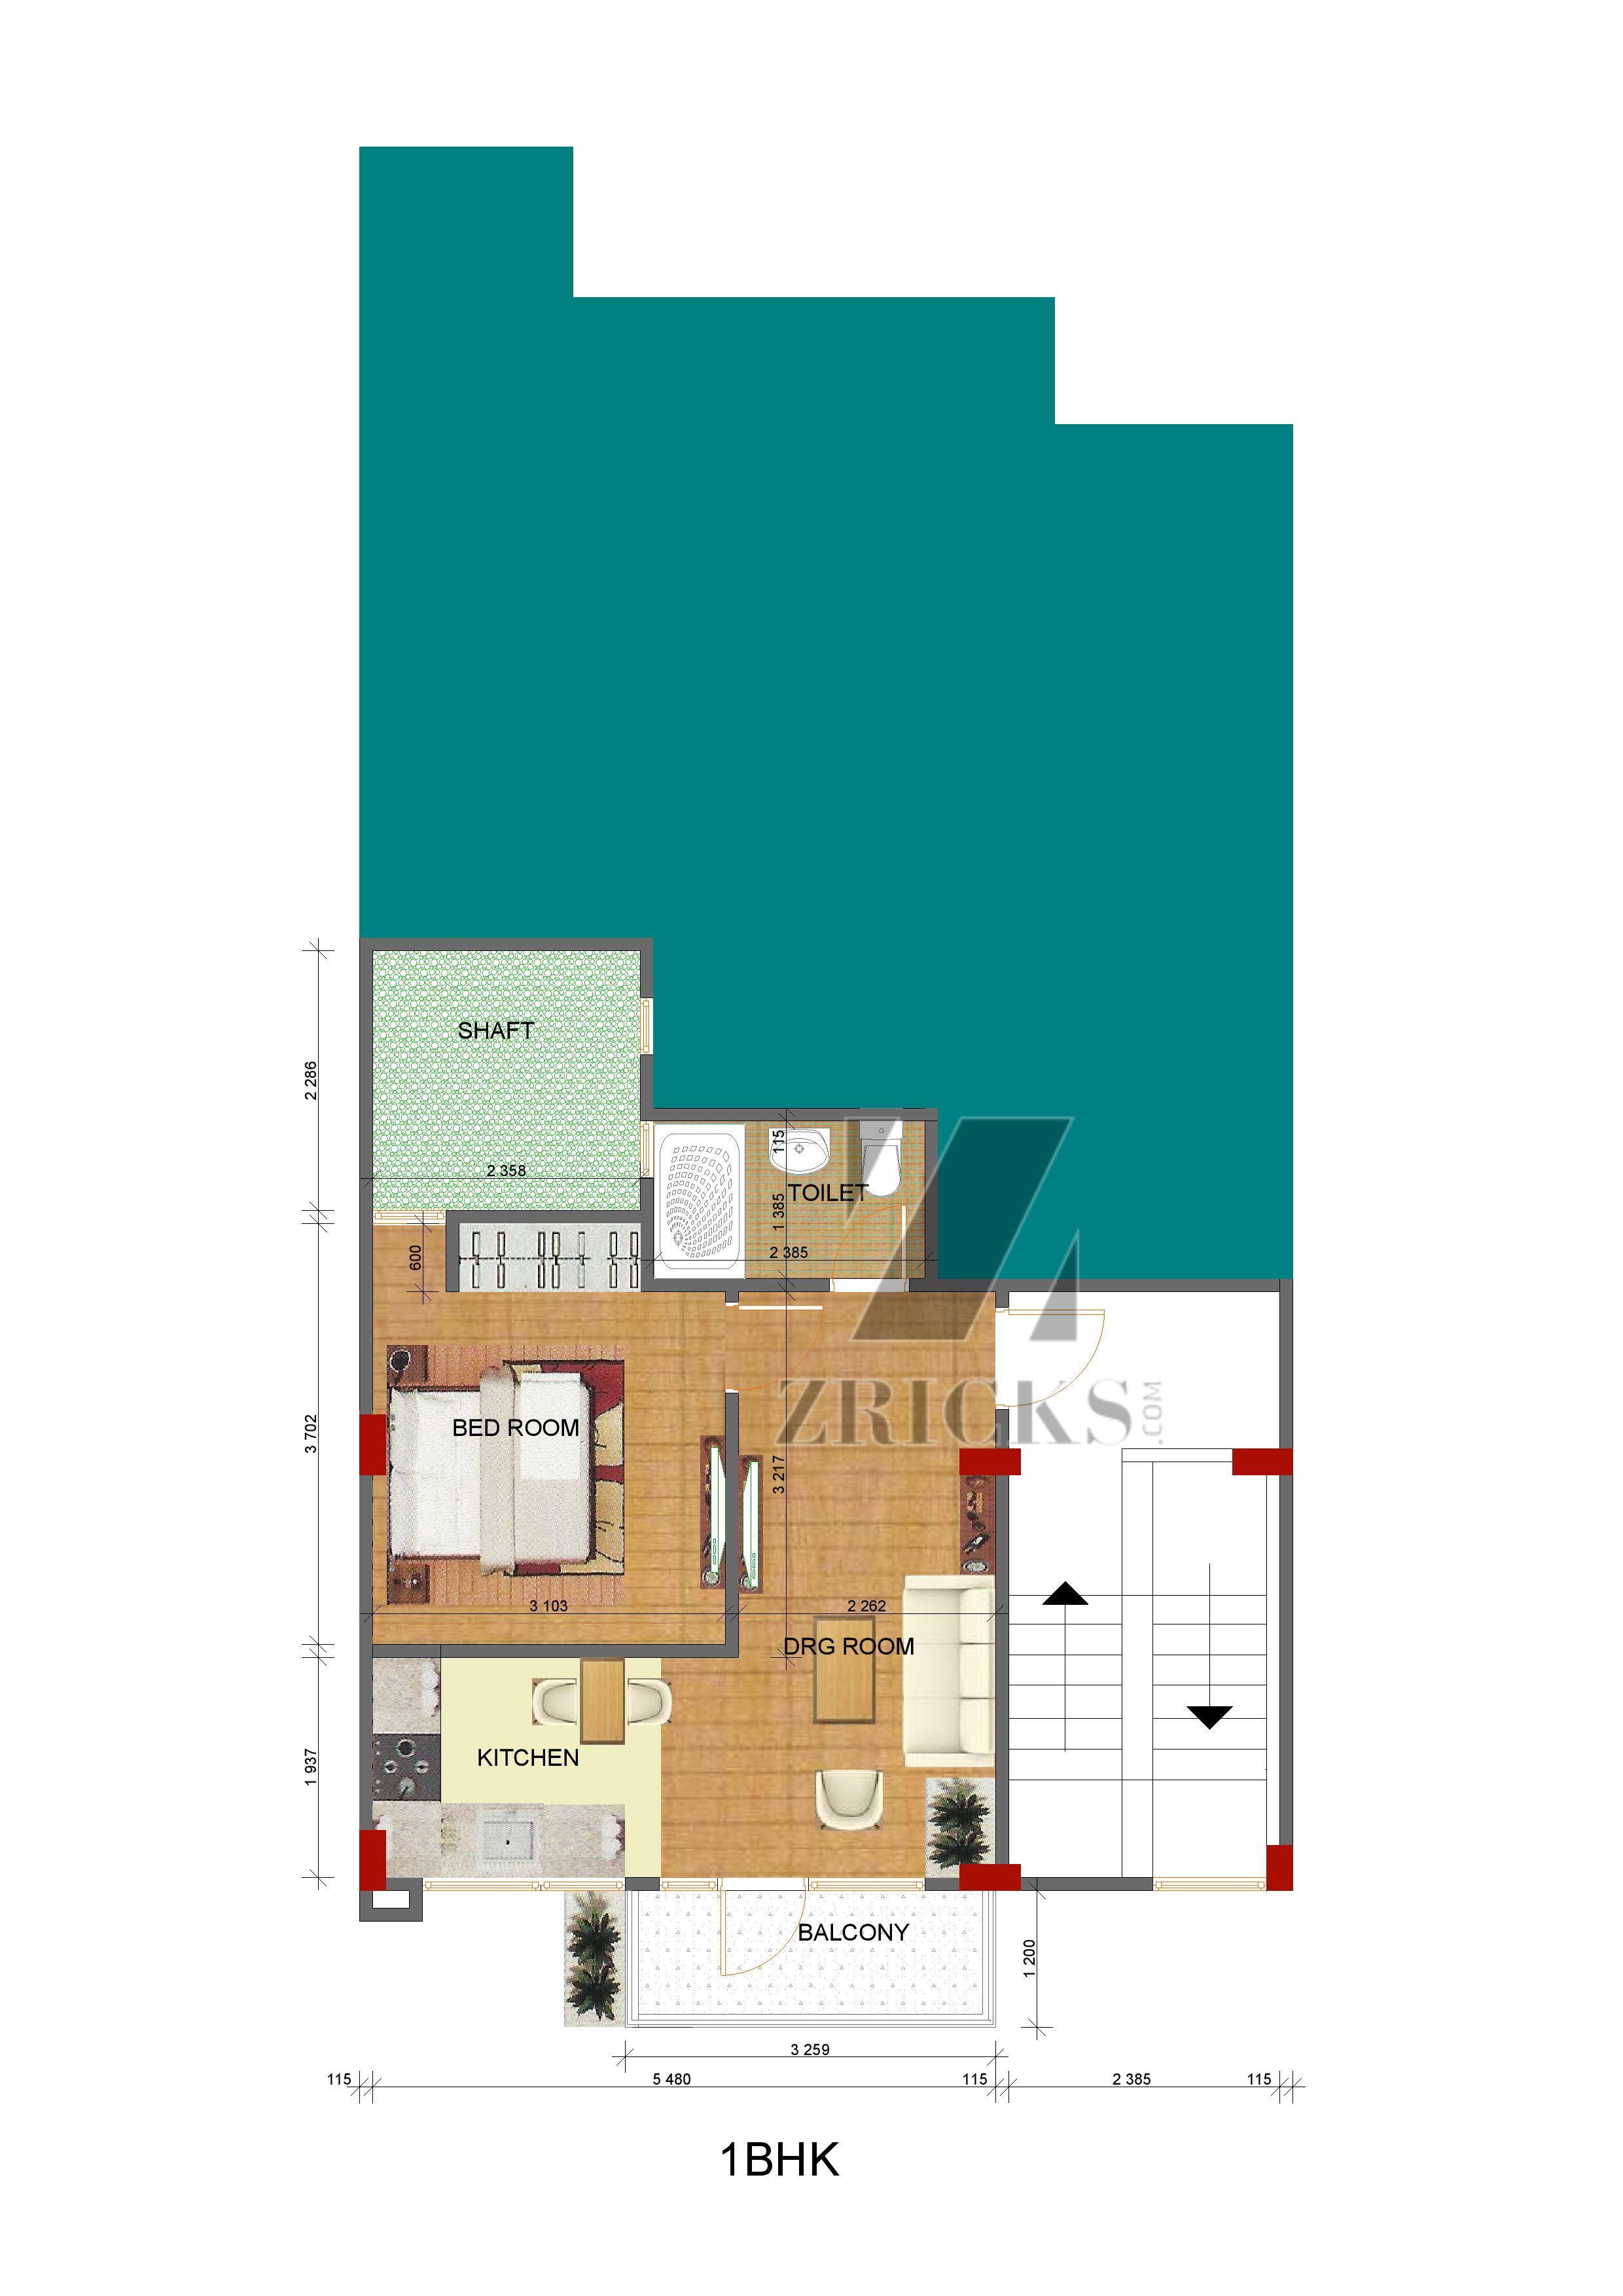 Shourya Shouryapuram Model Town Floor Plan